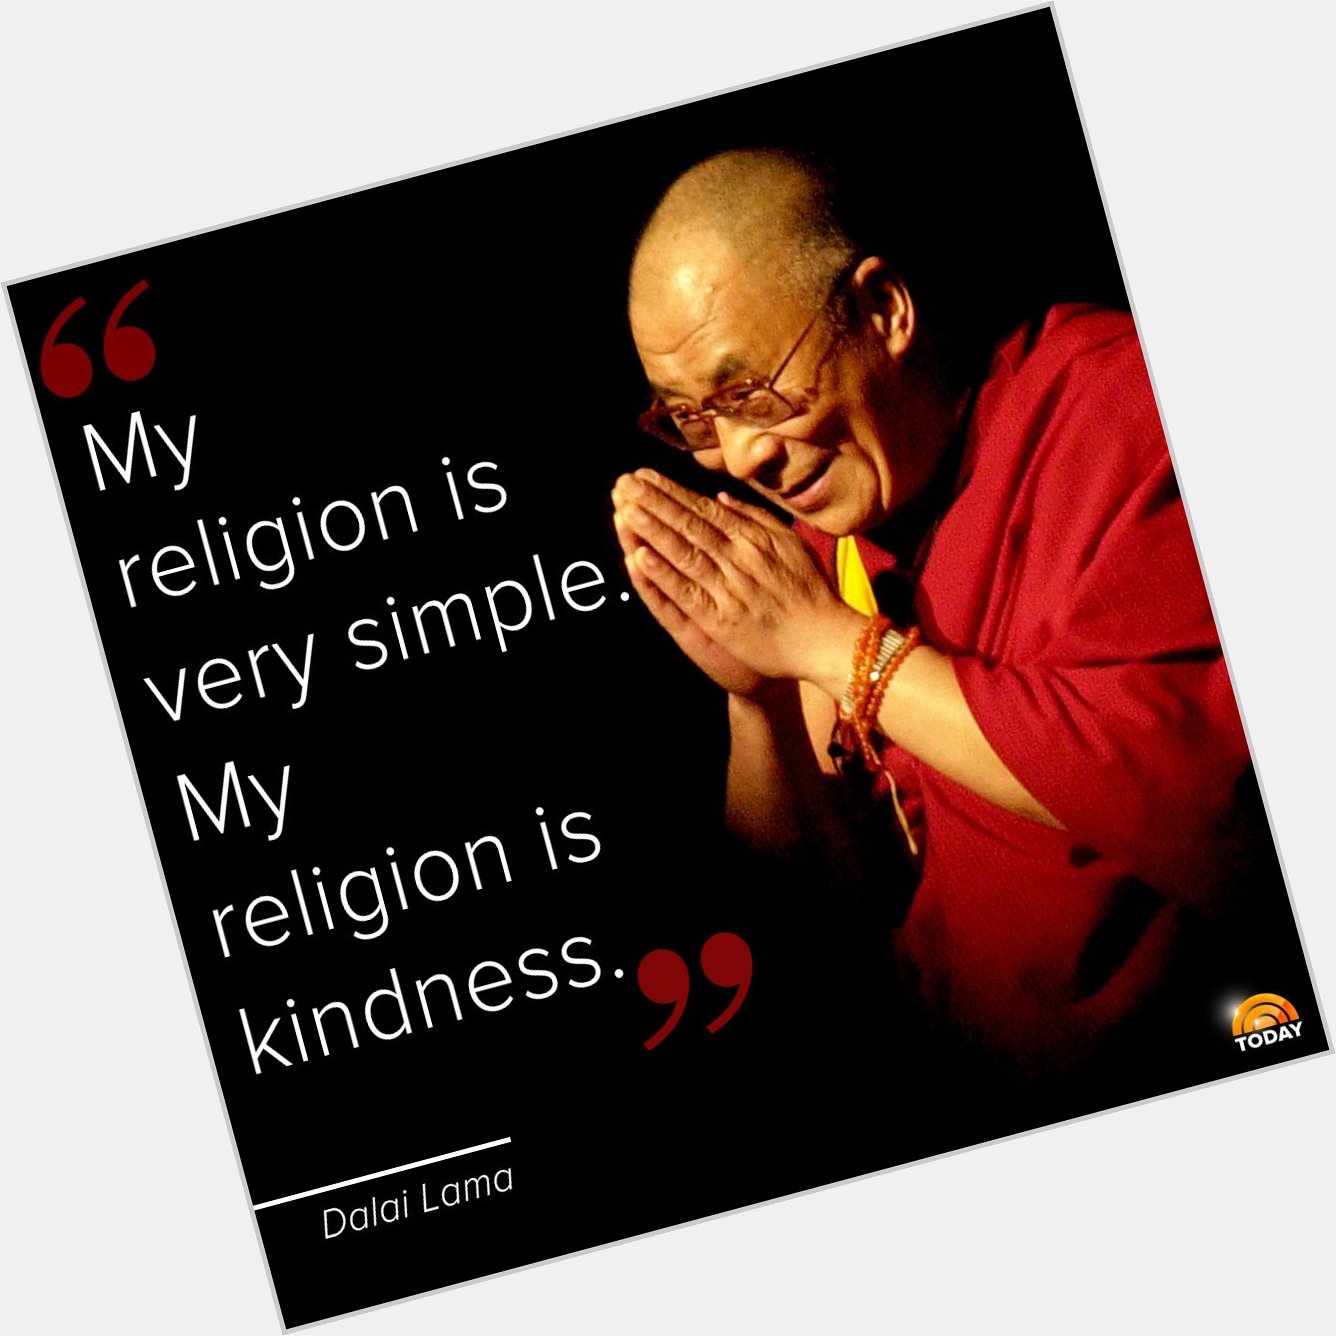 Happy 83rd birthday to His Holiness, the Dalai Lama! 